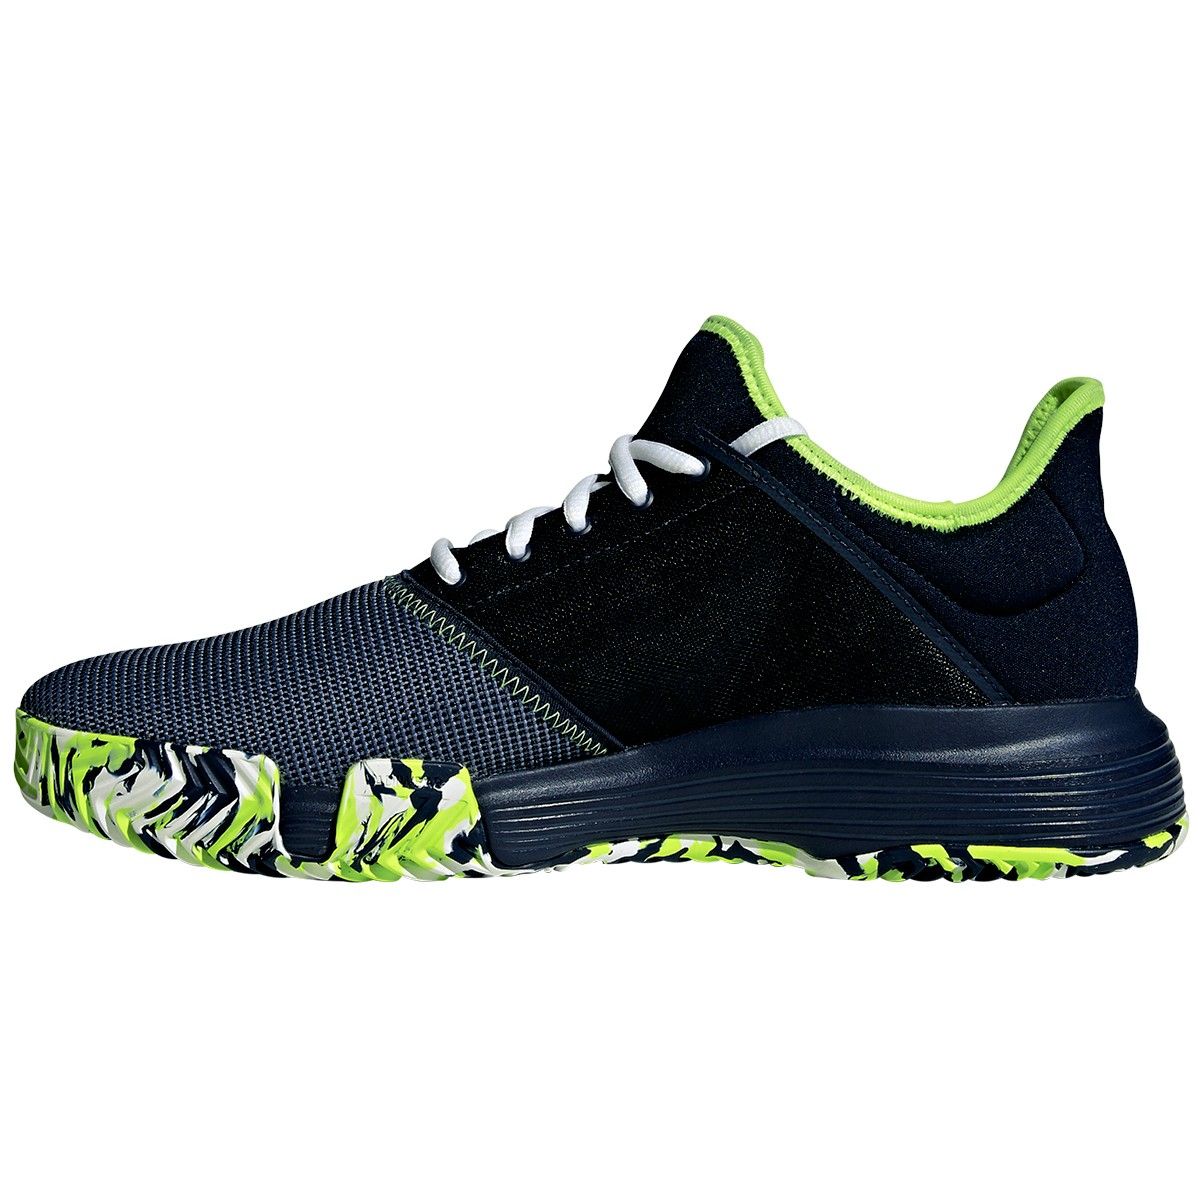 adidas GameCourt Men's Tennis Shoes F36713